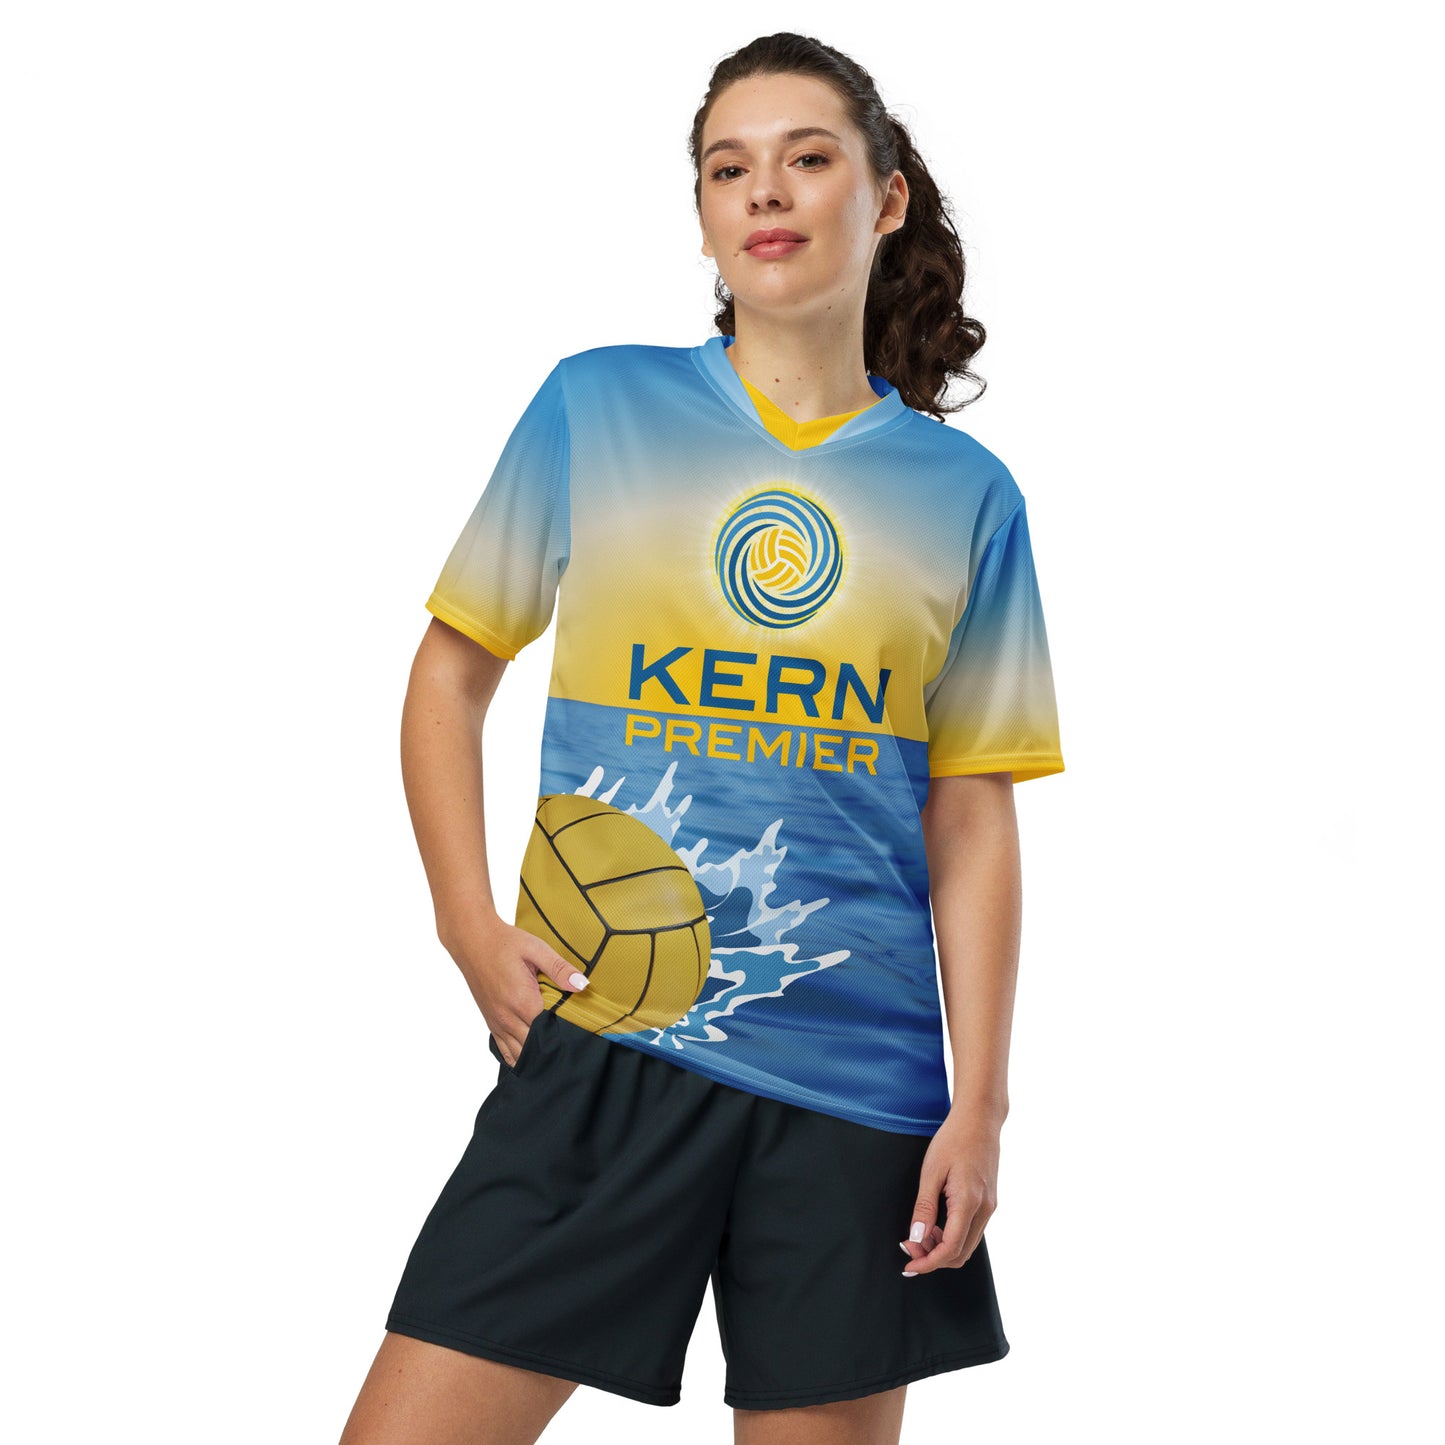 Kern Premier - Team Design - 2023 - Recycled unisex sports jersey